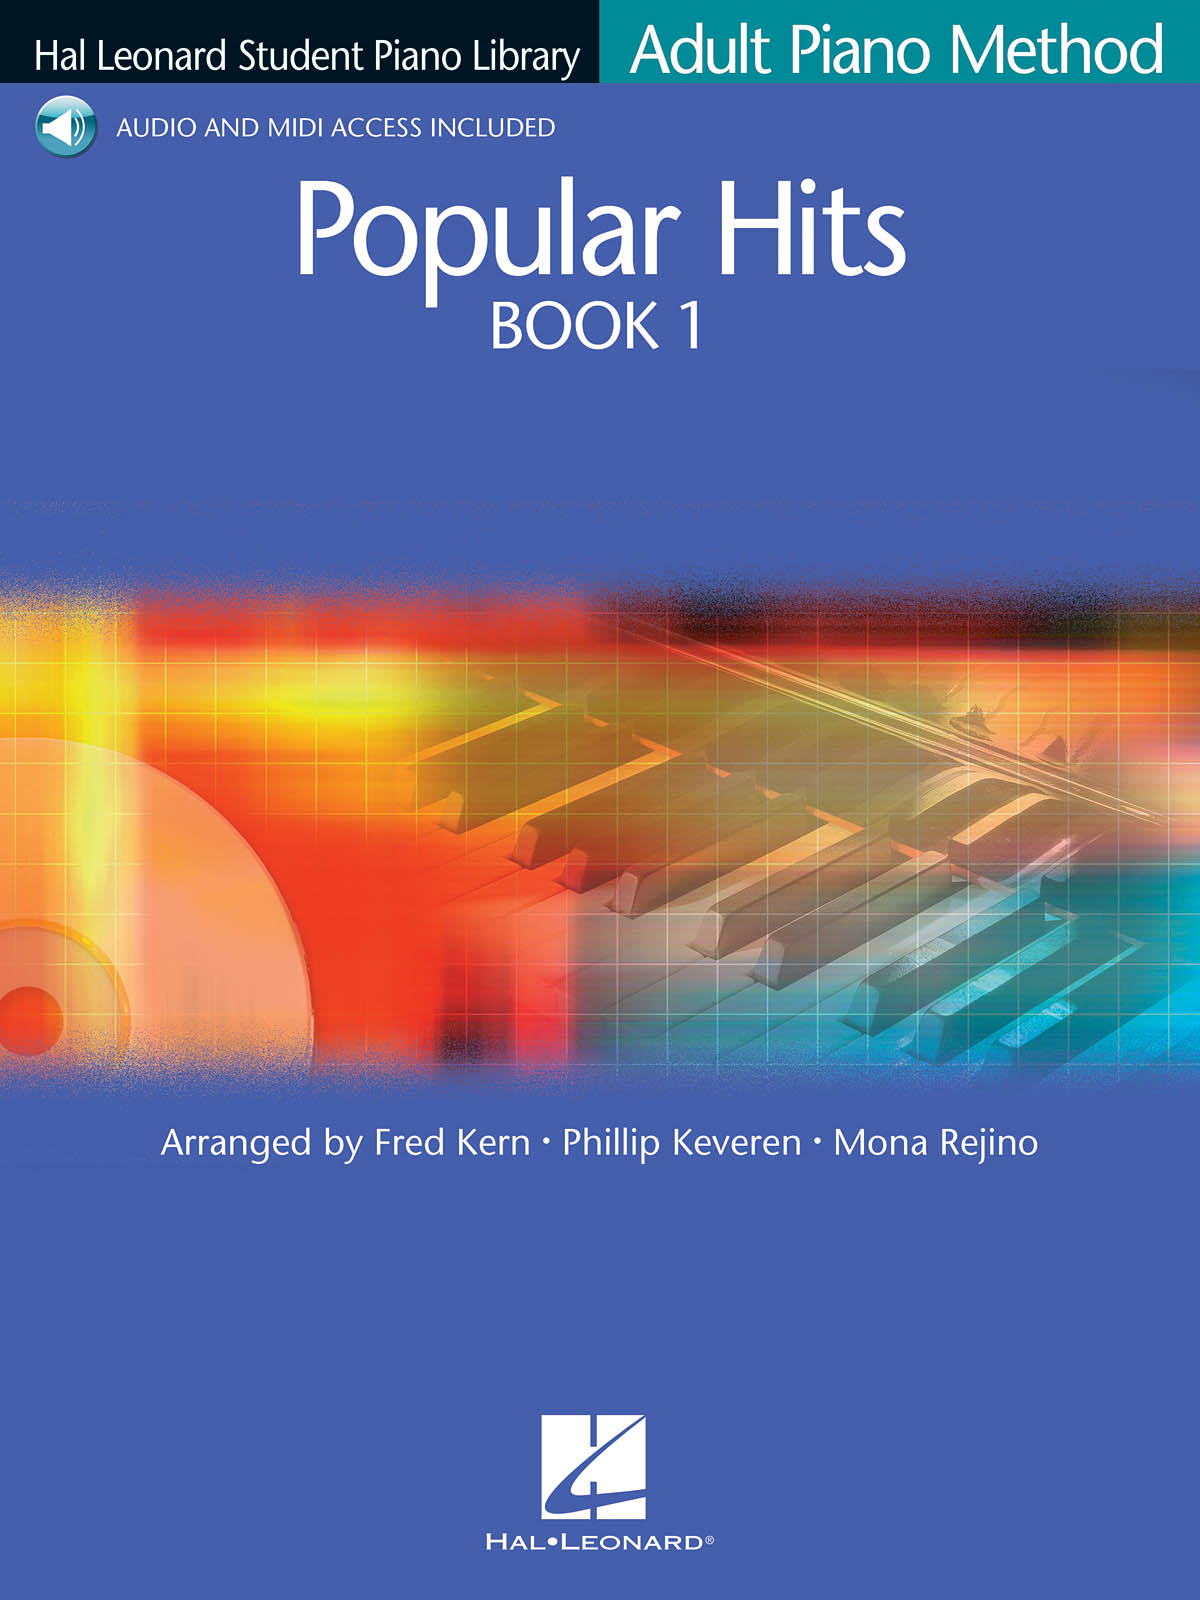 Hal Leonard Student Piano Library: Adult Piano Method – Popular Hits Book 1 (Book/CD)